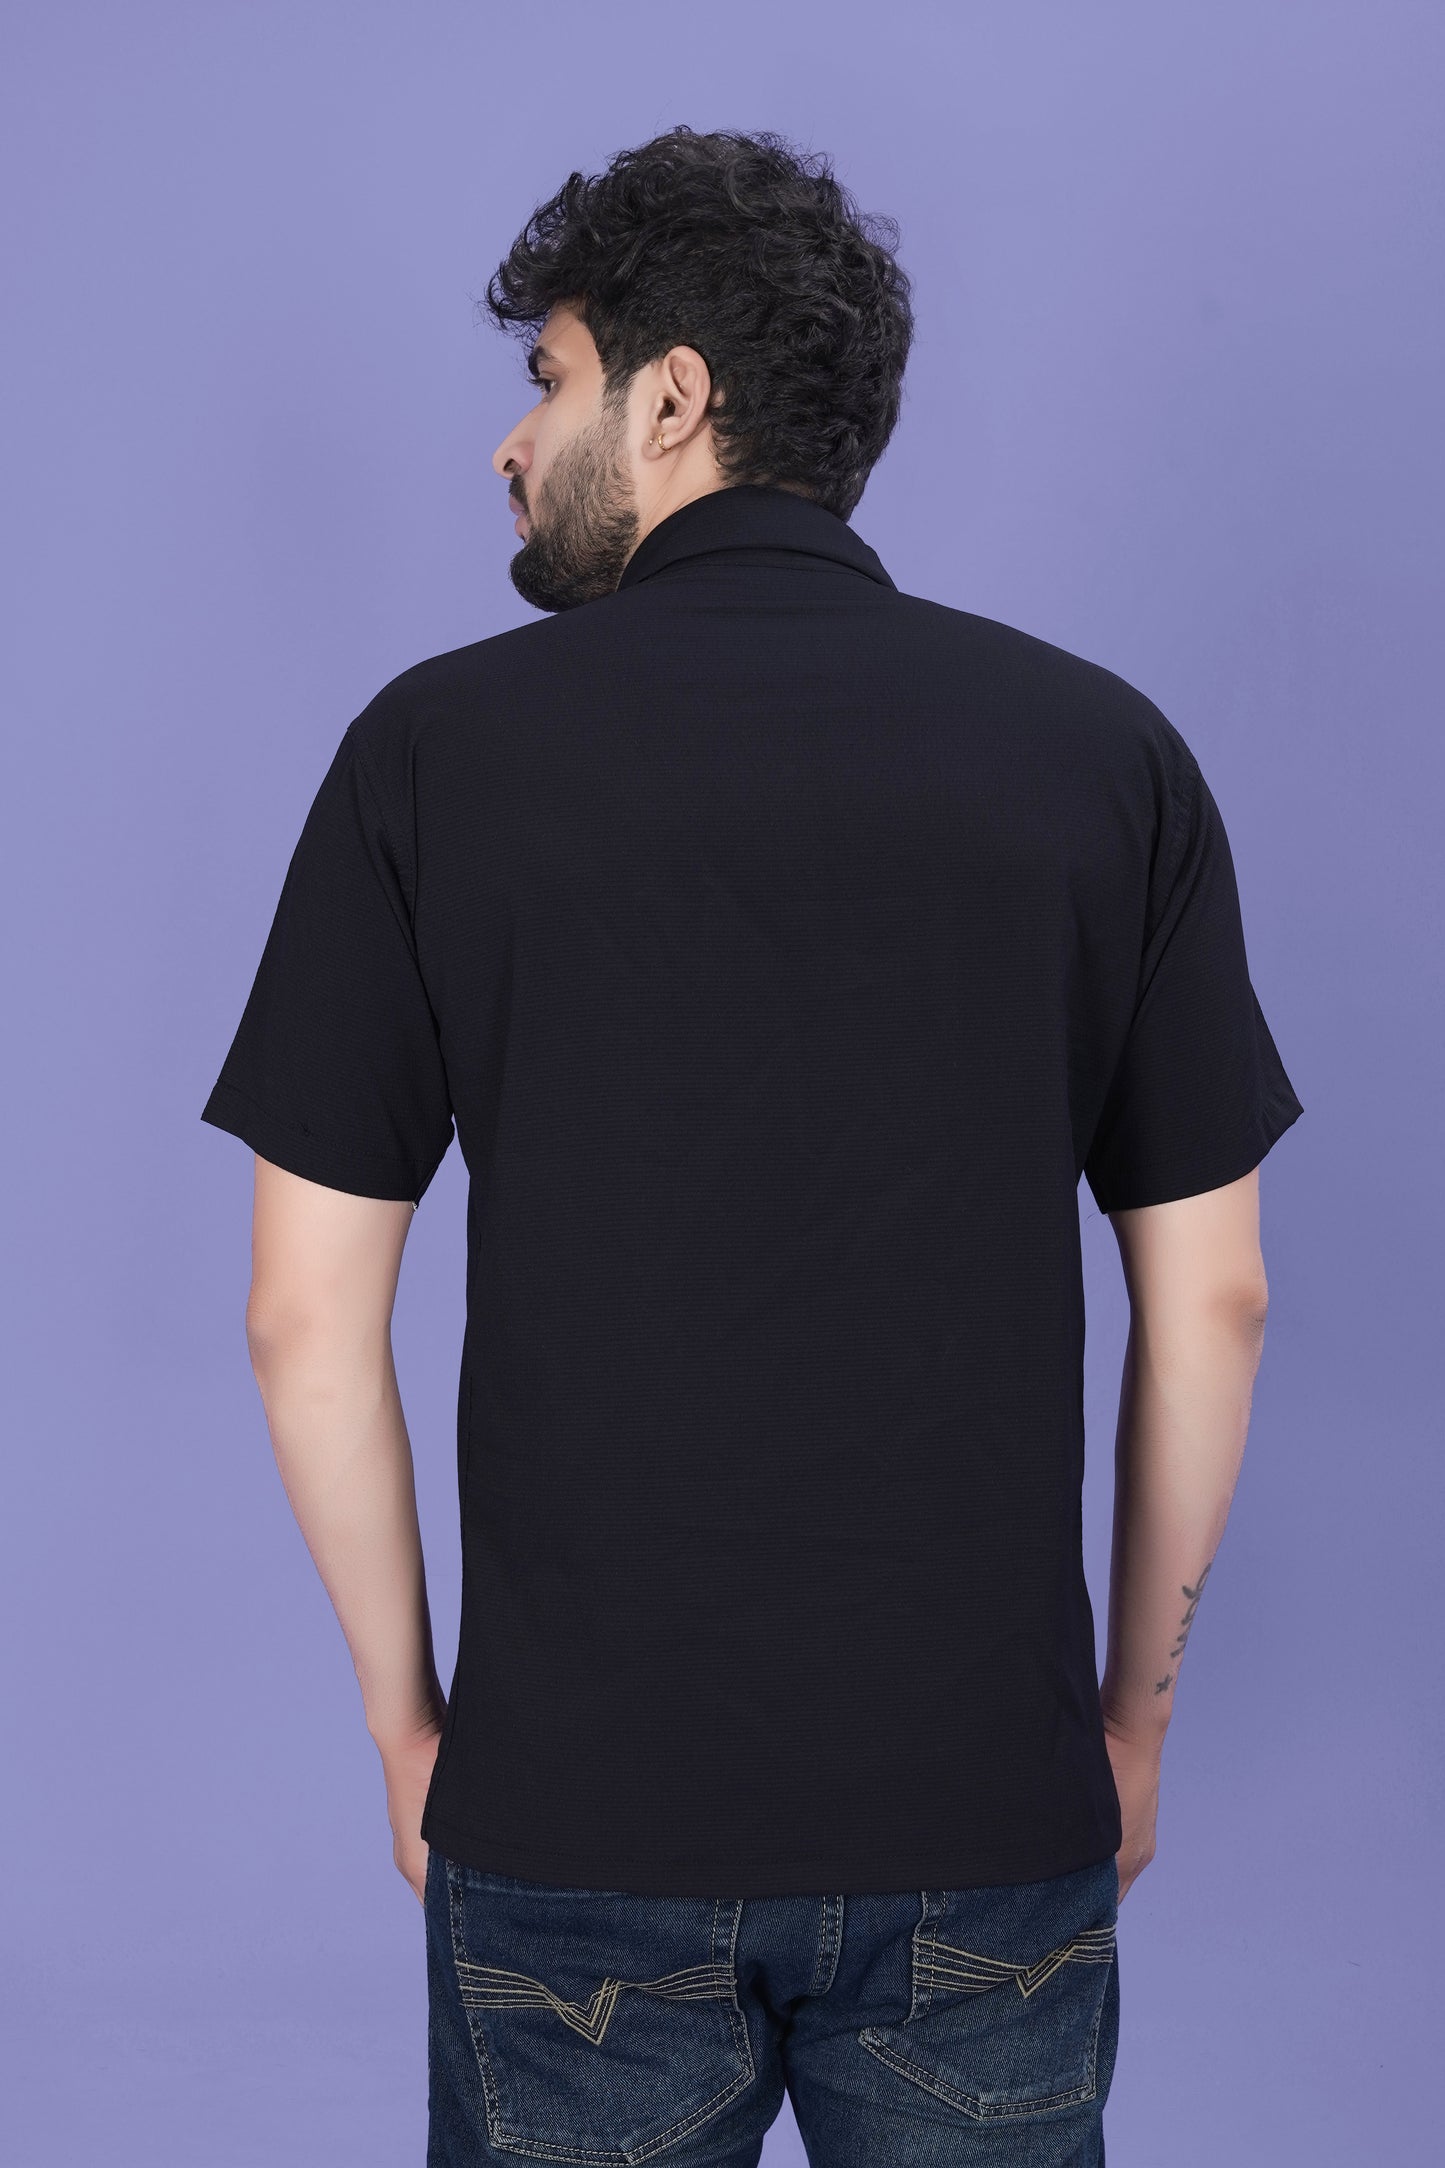 Black Half-Sleeves Men’s Casual Shirt